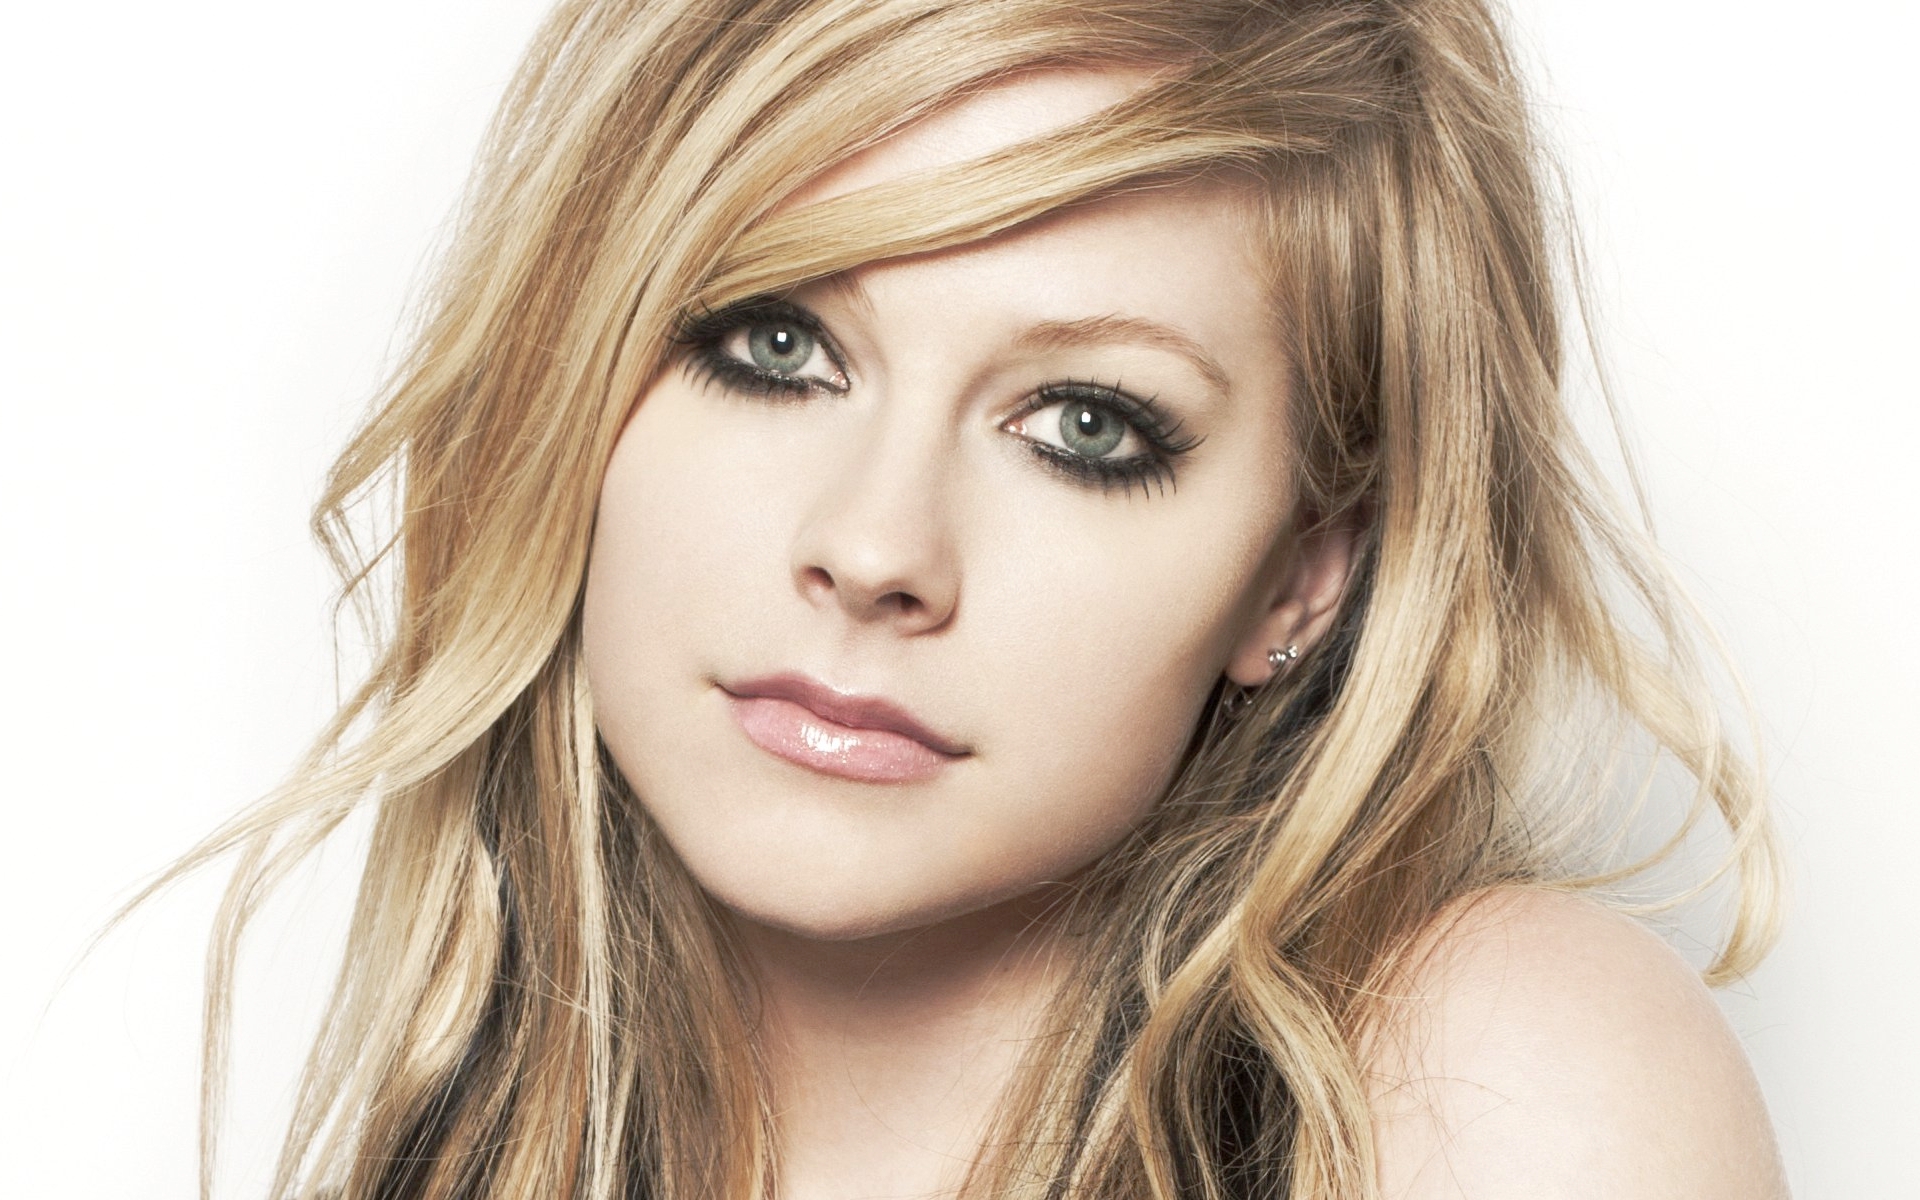 Avril Lavigne Avril Lavigne Wallpaper (31810140) Fanpop